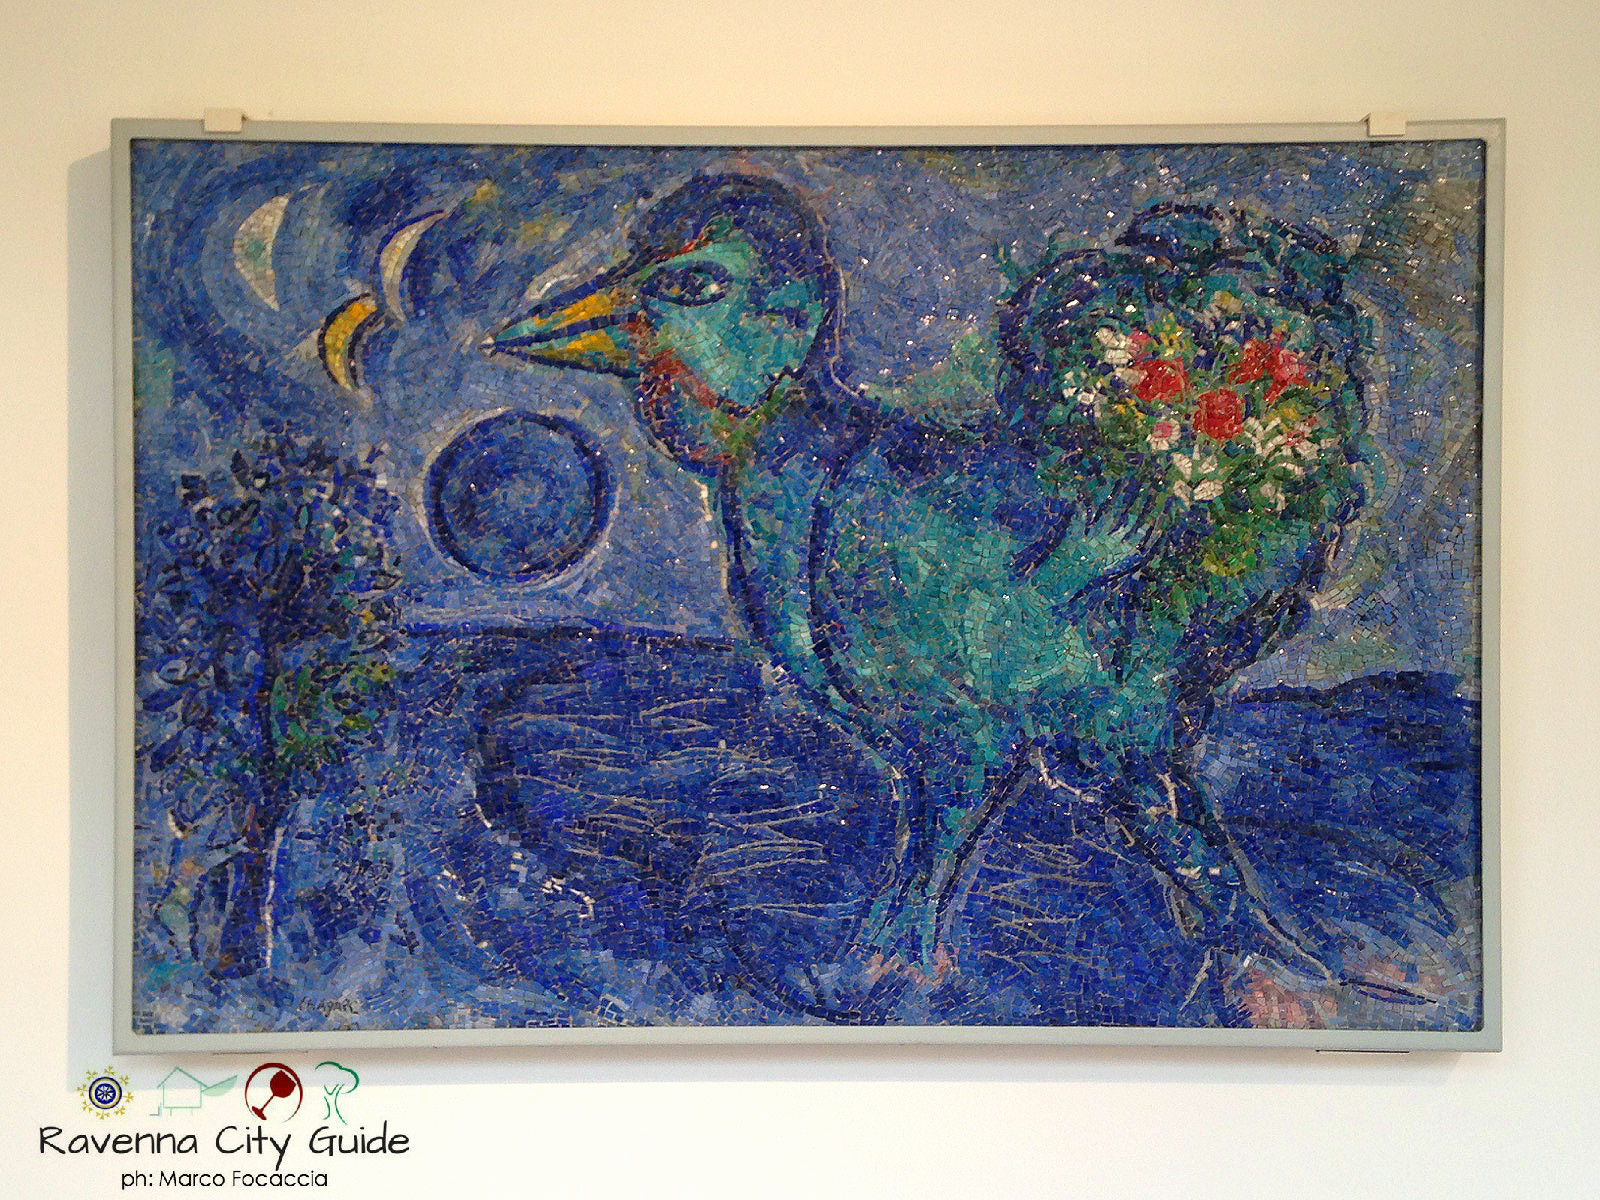 chagall mosaic